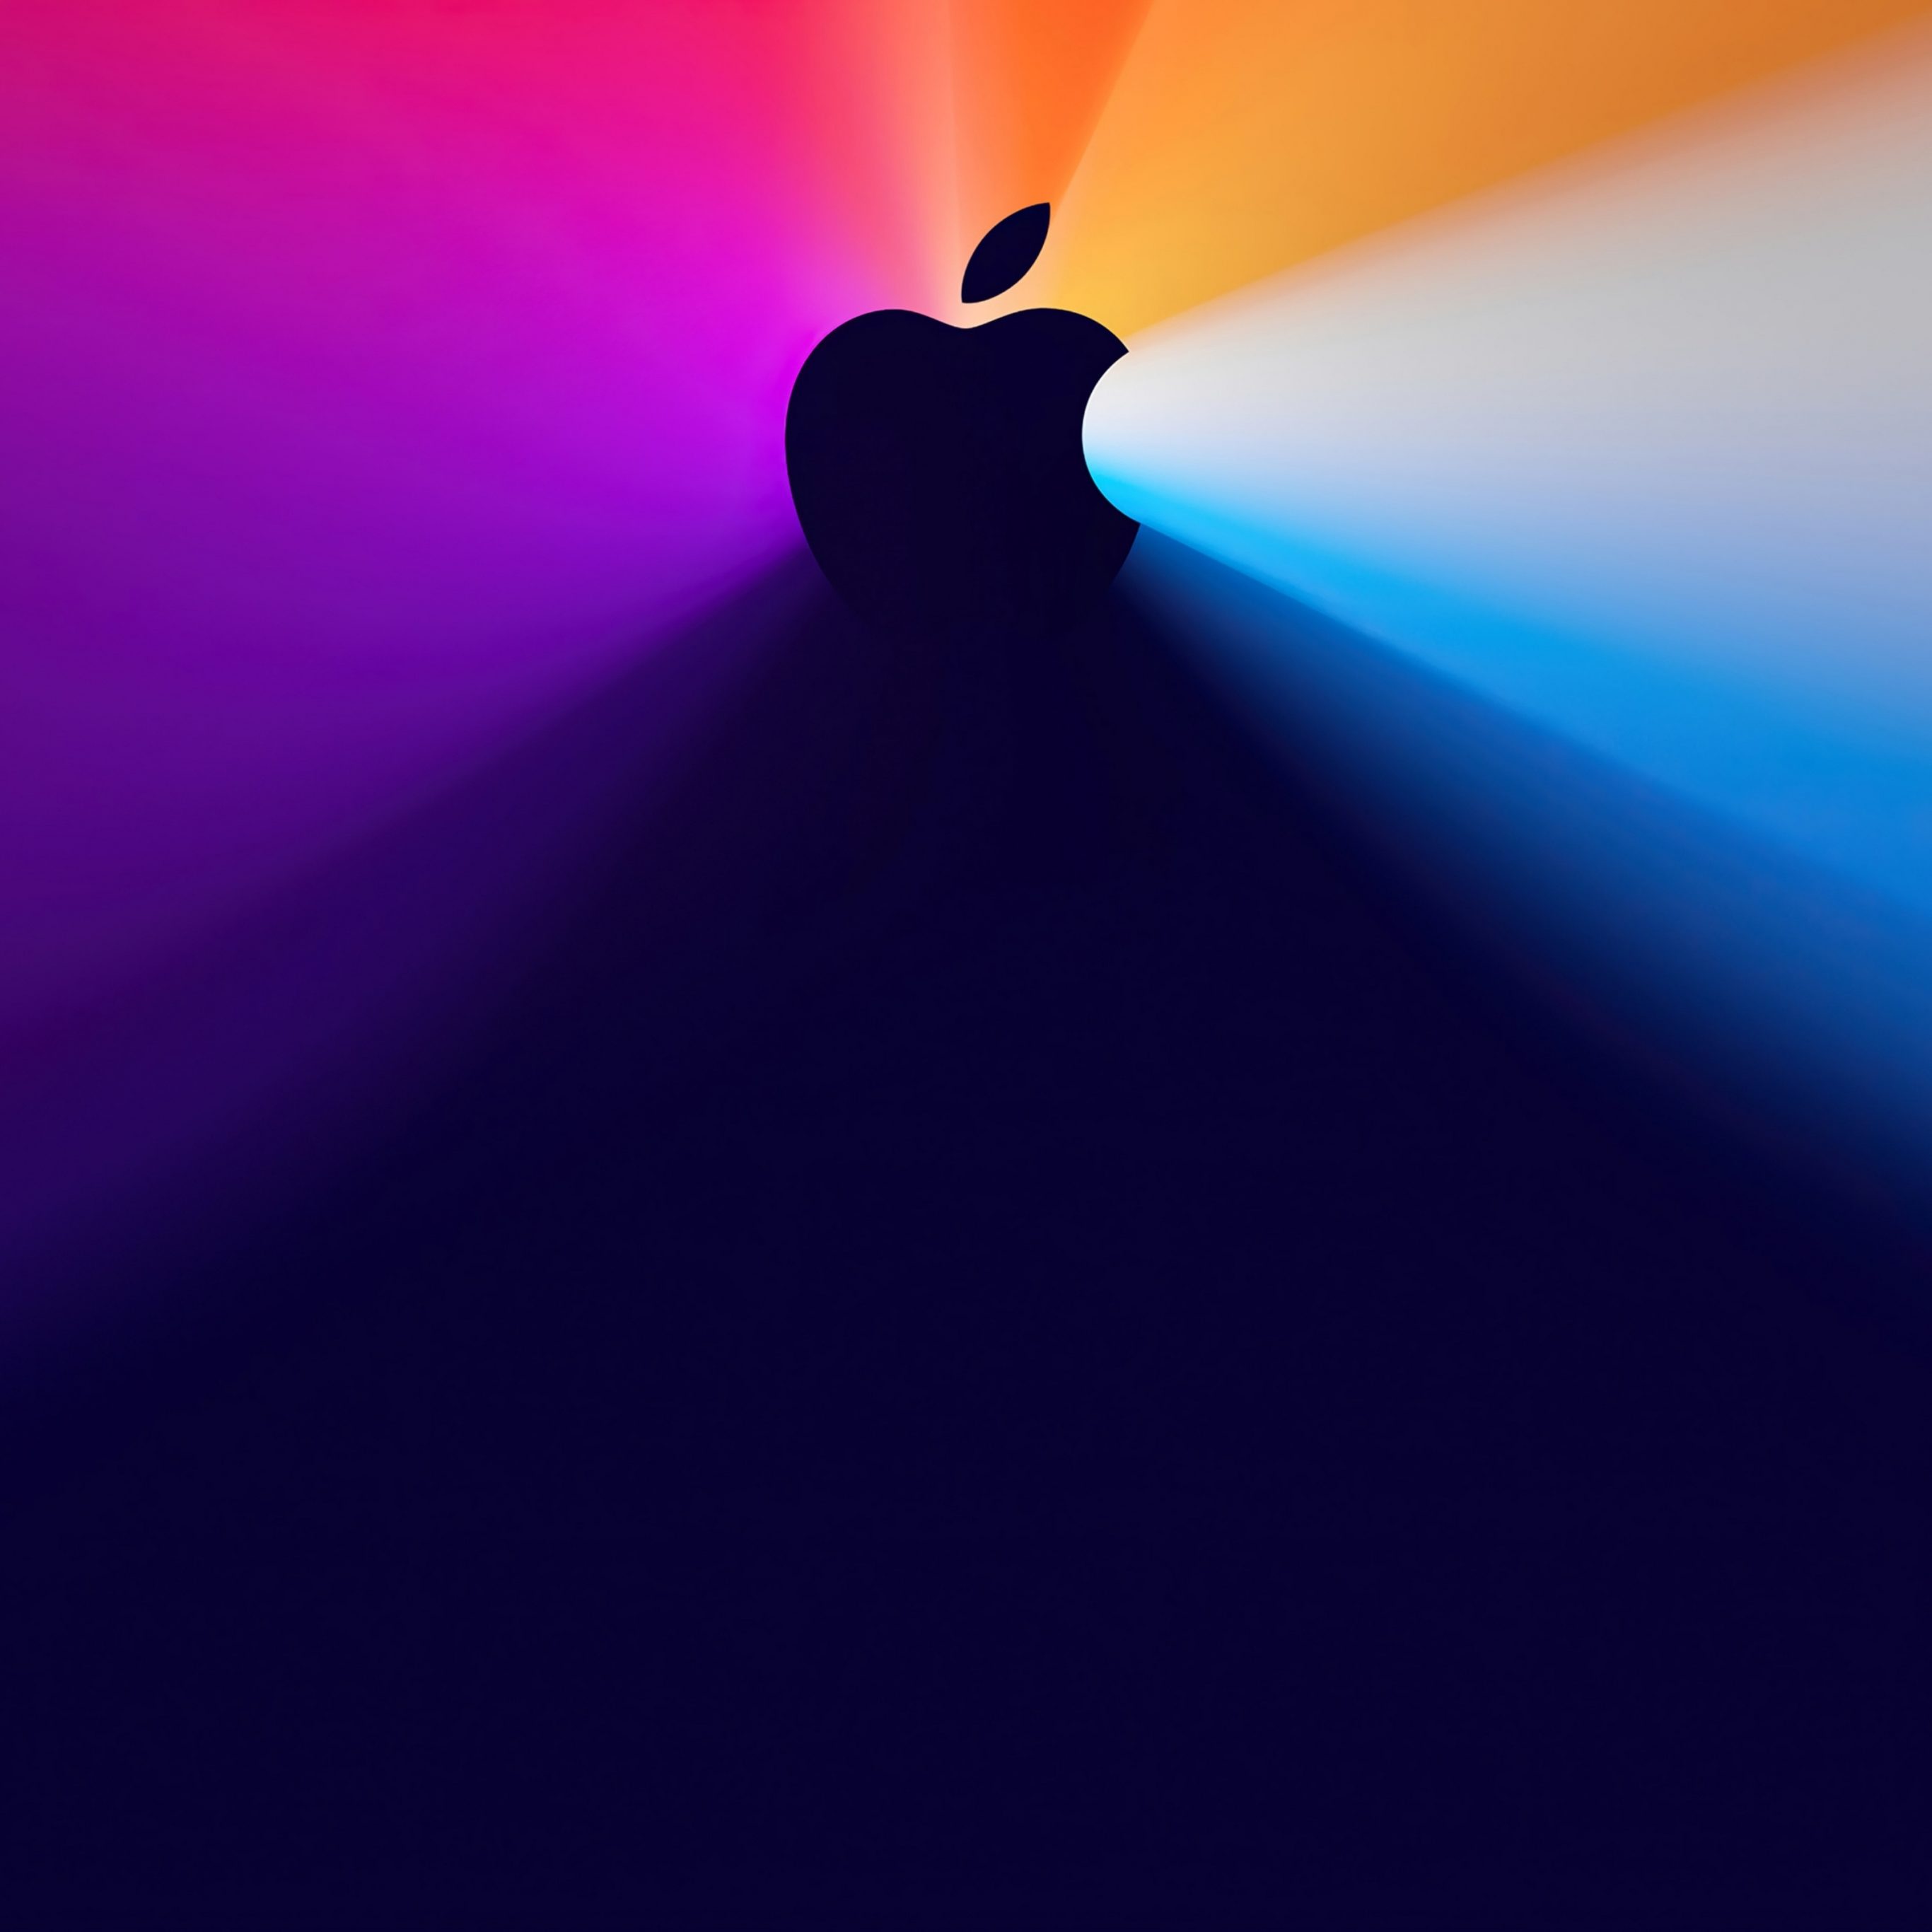 2732x2732 wallpapers 4k iPad Pro Colourful iPhone 12 Apple Logo iPad Wallpaper 2732x2732 pixels resolution